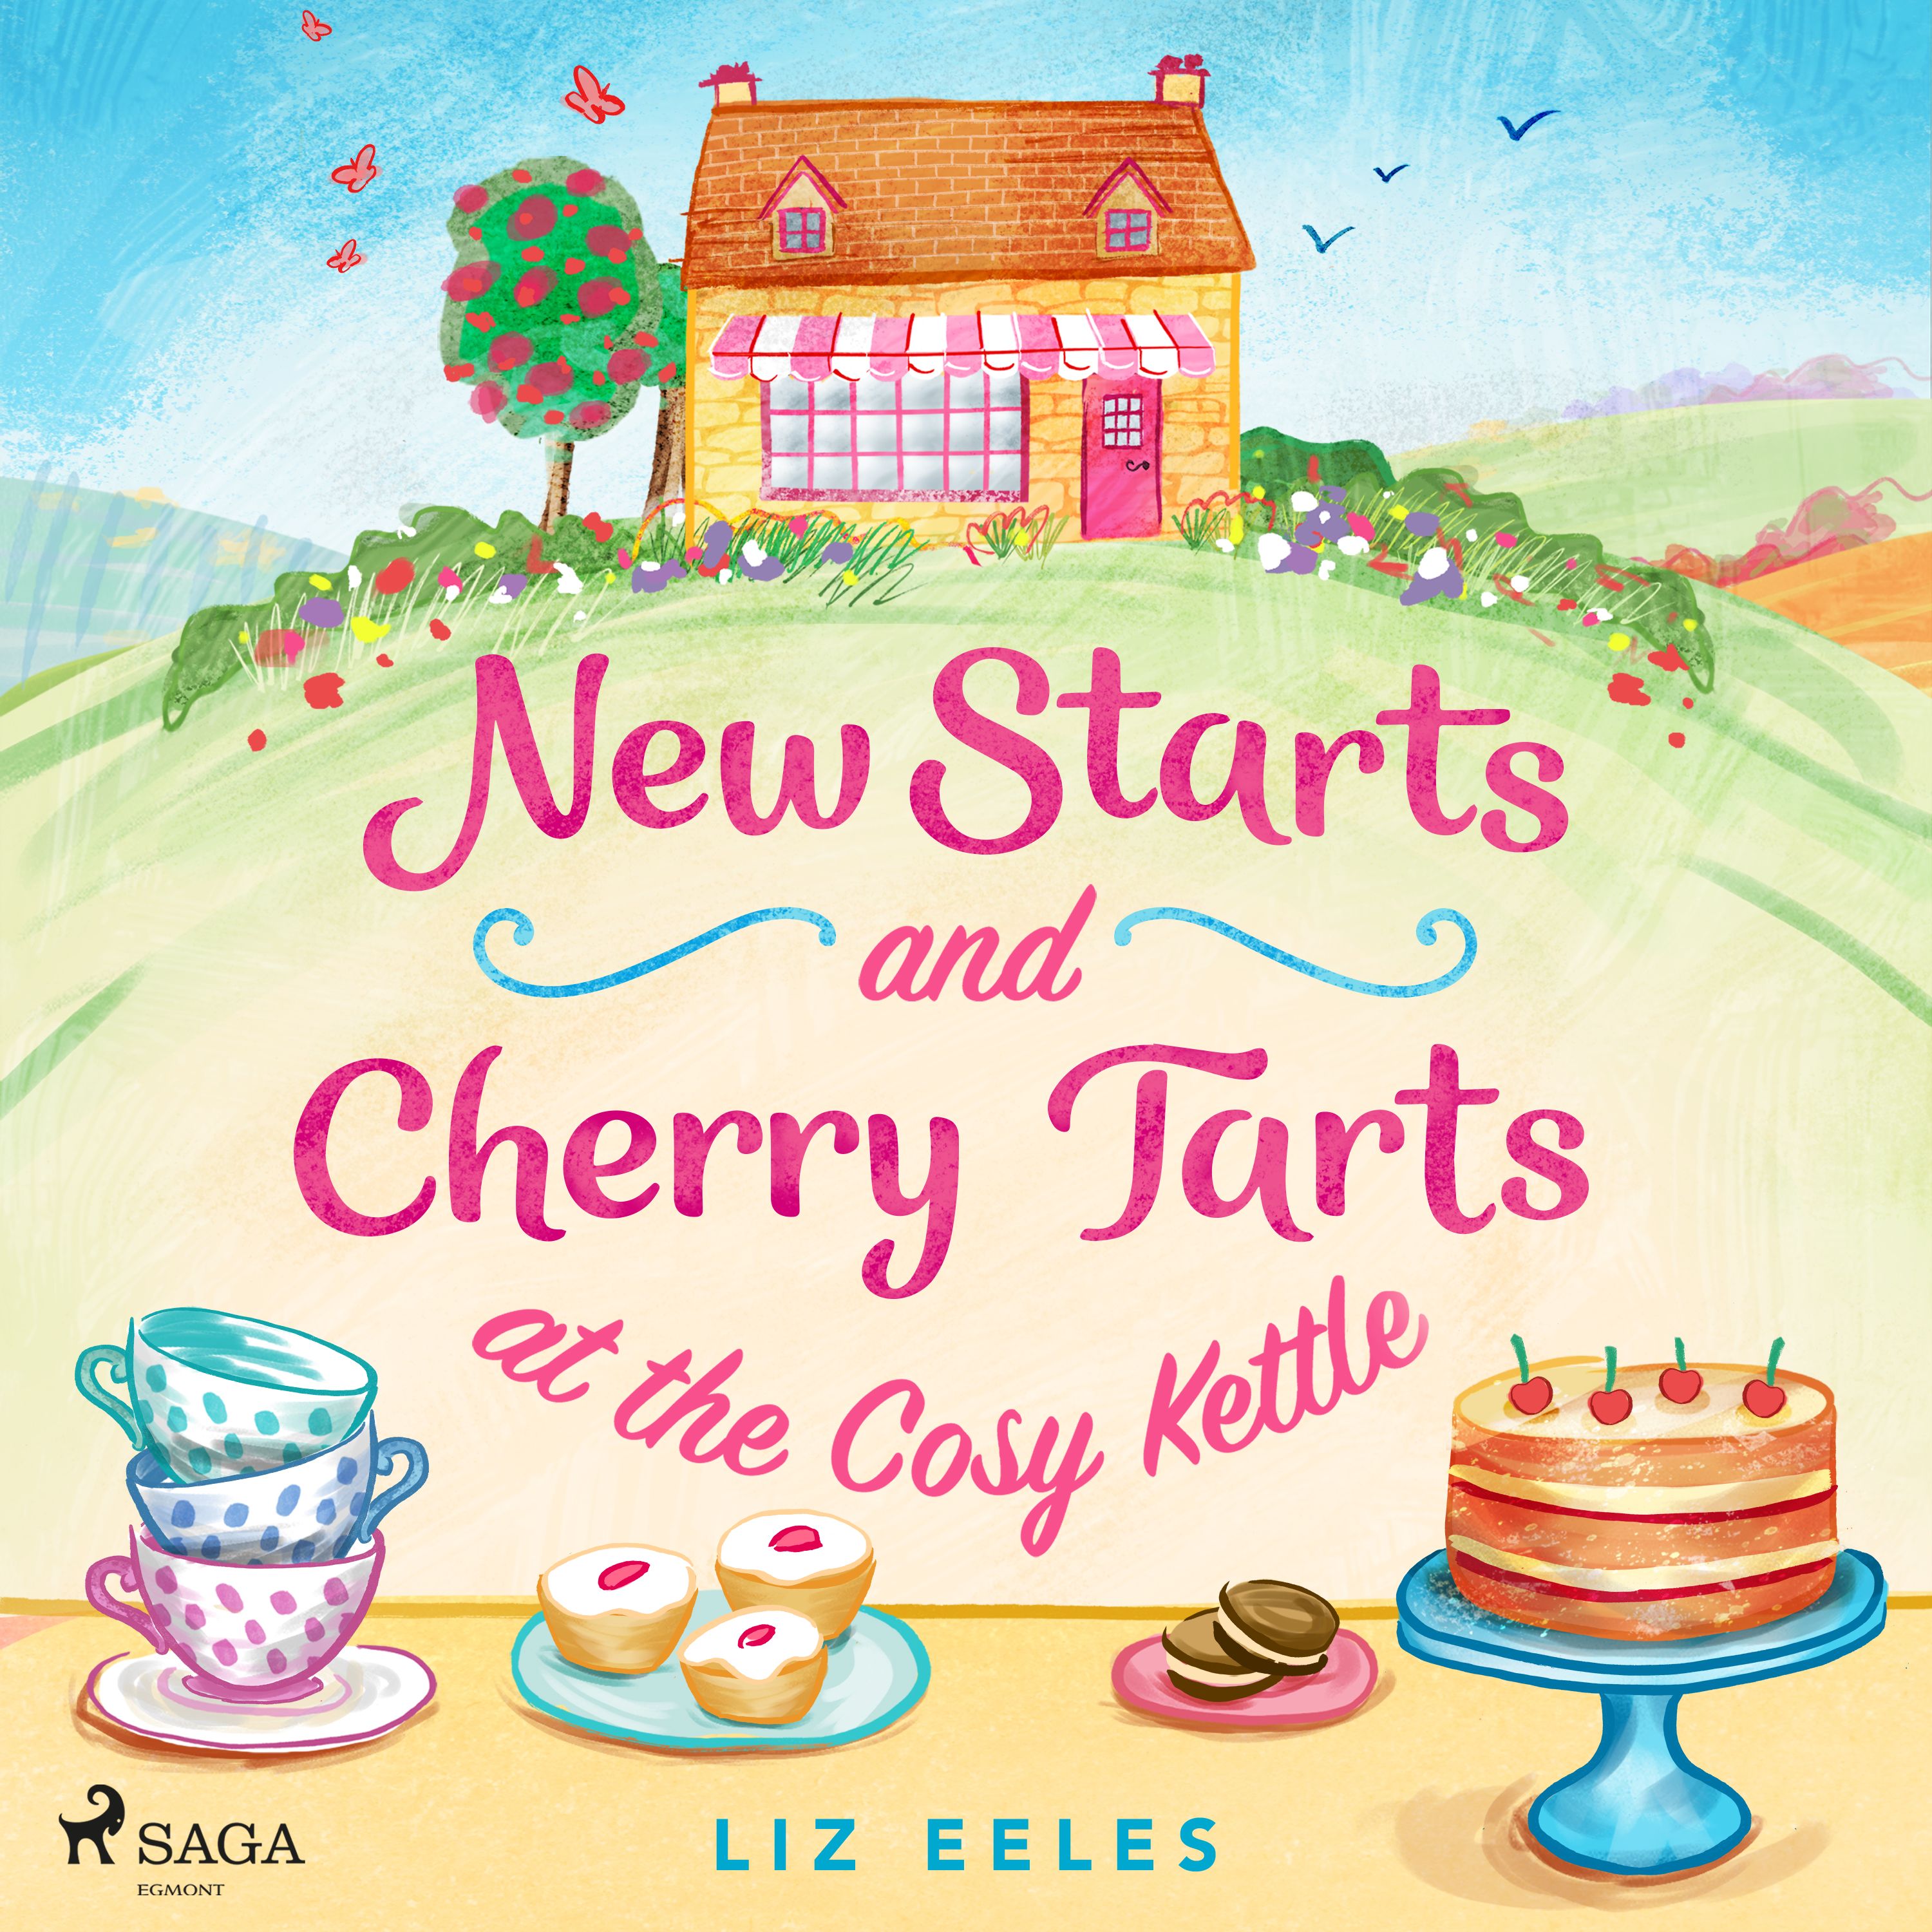 New Starts and Cherry Tarts at the Cosy Kettle, ljudbok av Liz Eeles